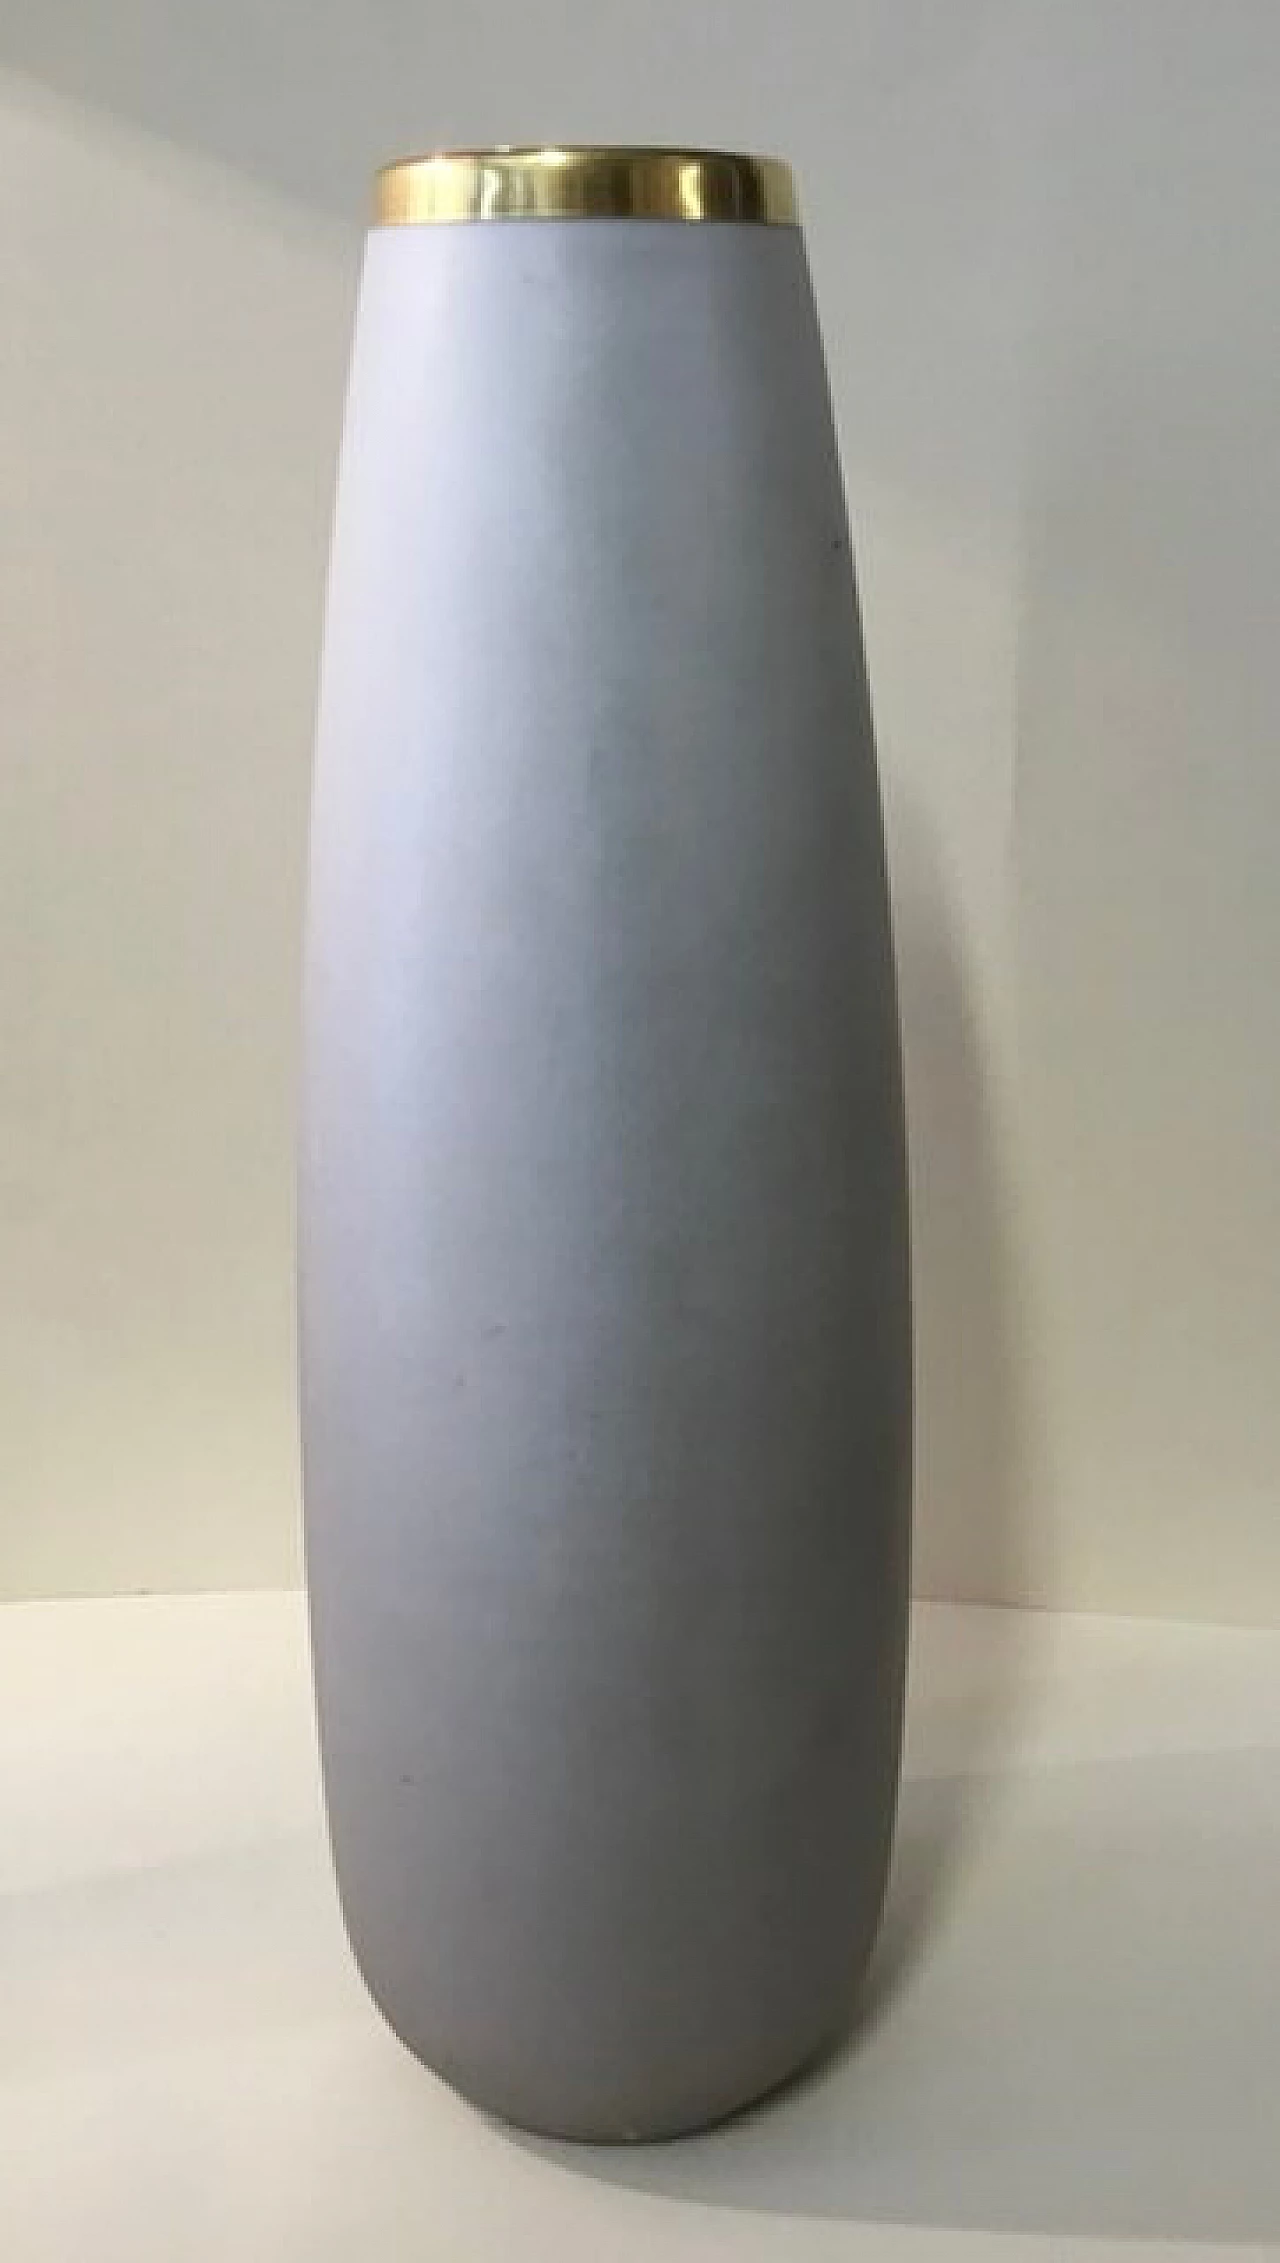 Porcelain vase with giraffes, Finzi 1092528